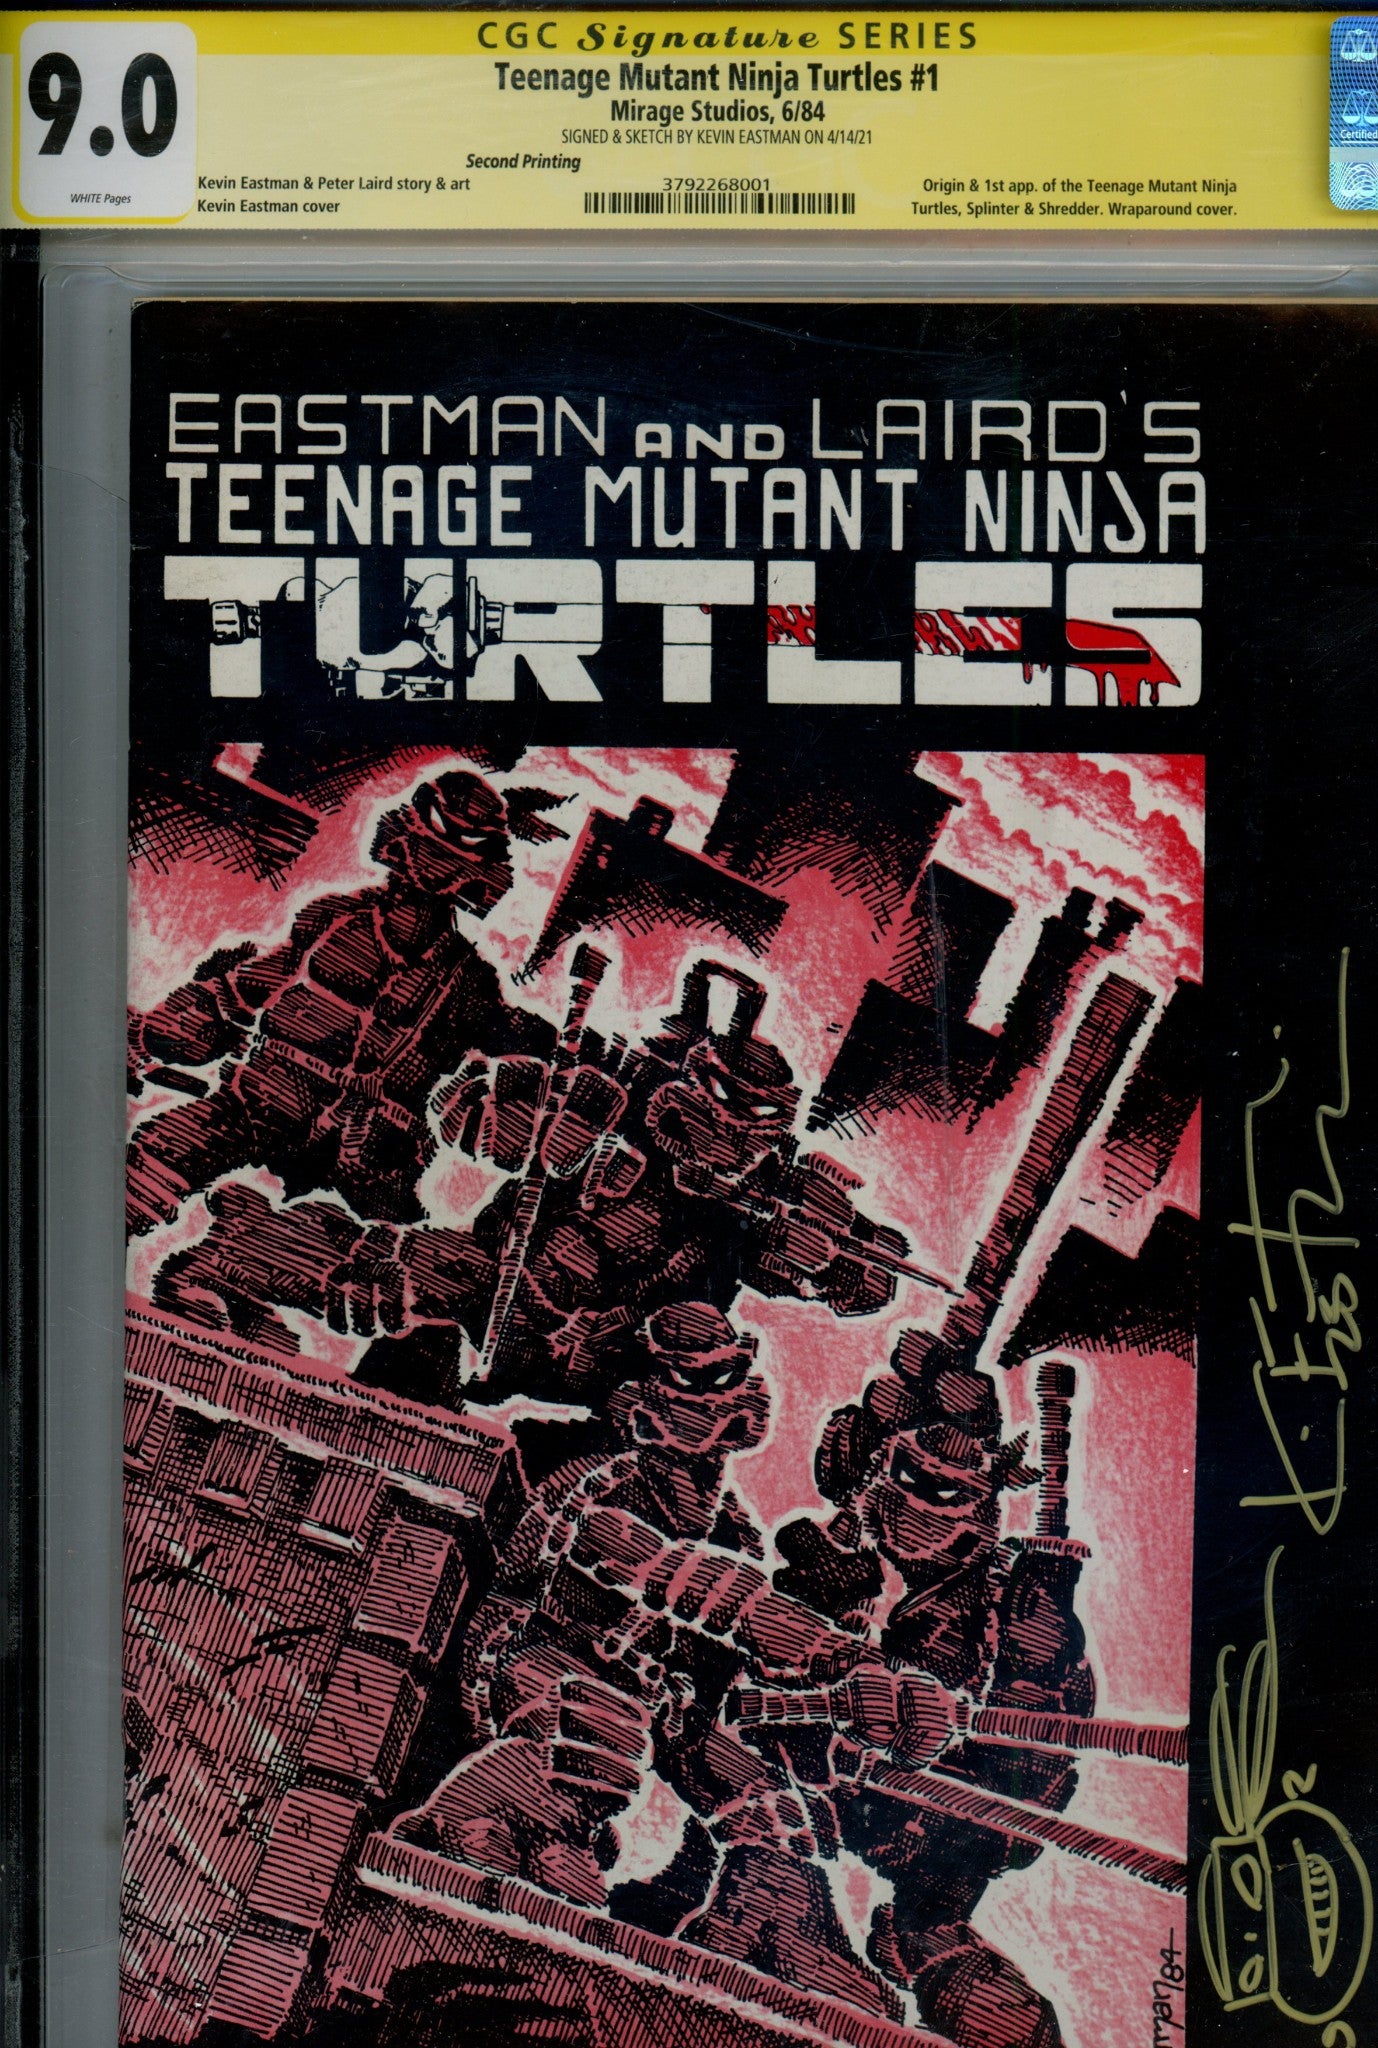 Teenage Mutant Ninja Turtles Vol 1 1 CGC 9.0 (VF/NM) (1984) 2nd Print Signed / Remarked x1 Cover Kevin Eastman 